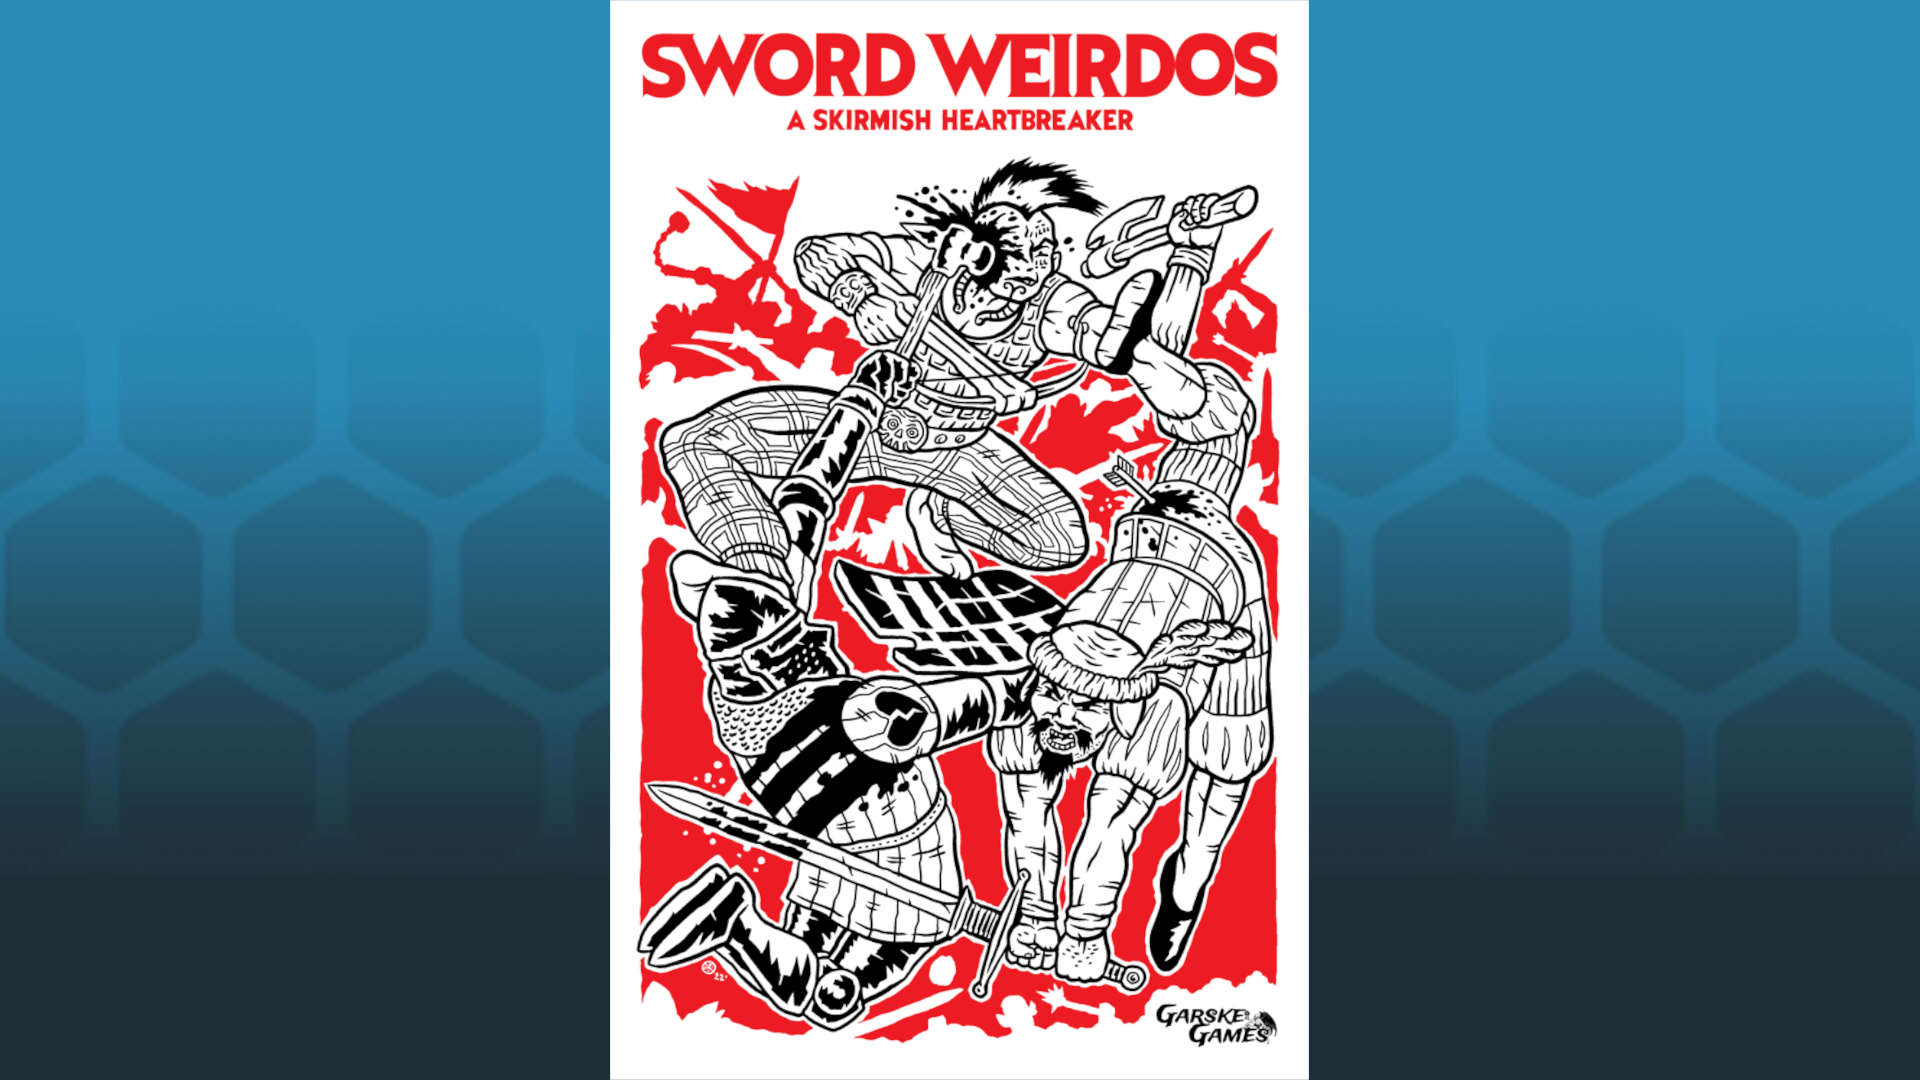 Sword Weirdos is like Warhammer but smaller and weirder - cover art by Łukasz Kowalczuk, three fantasy warriors fighting